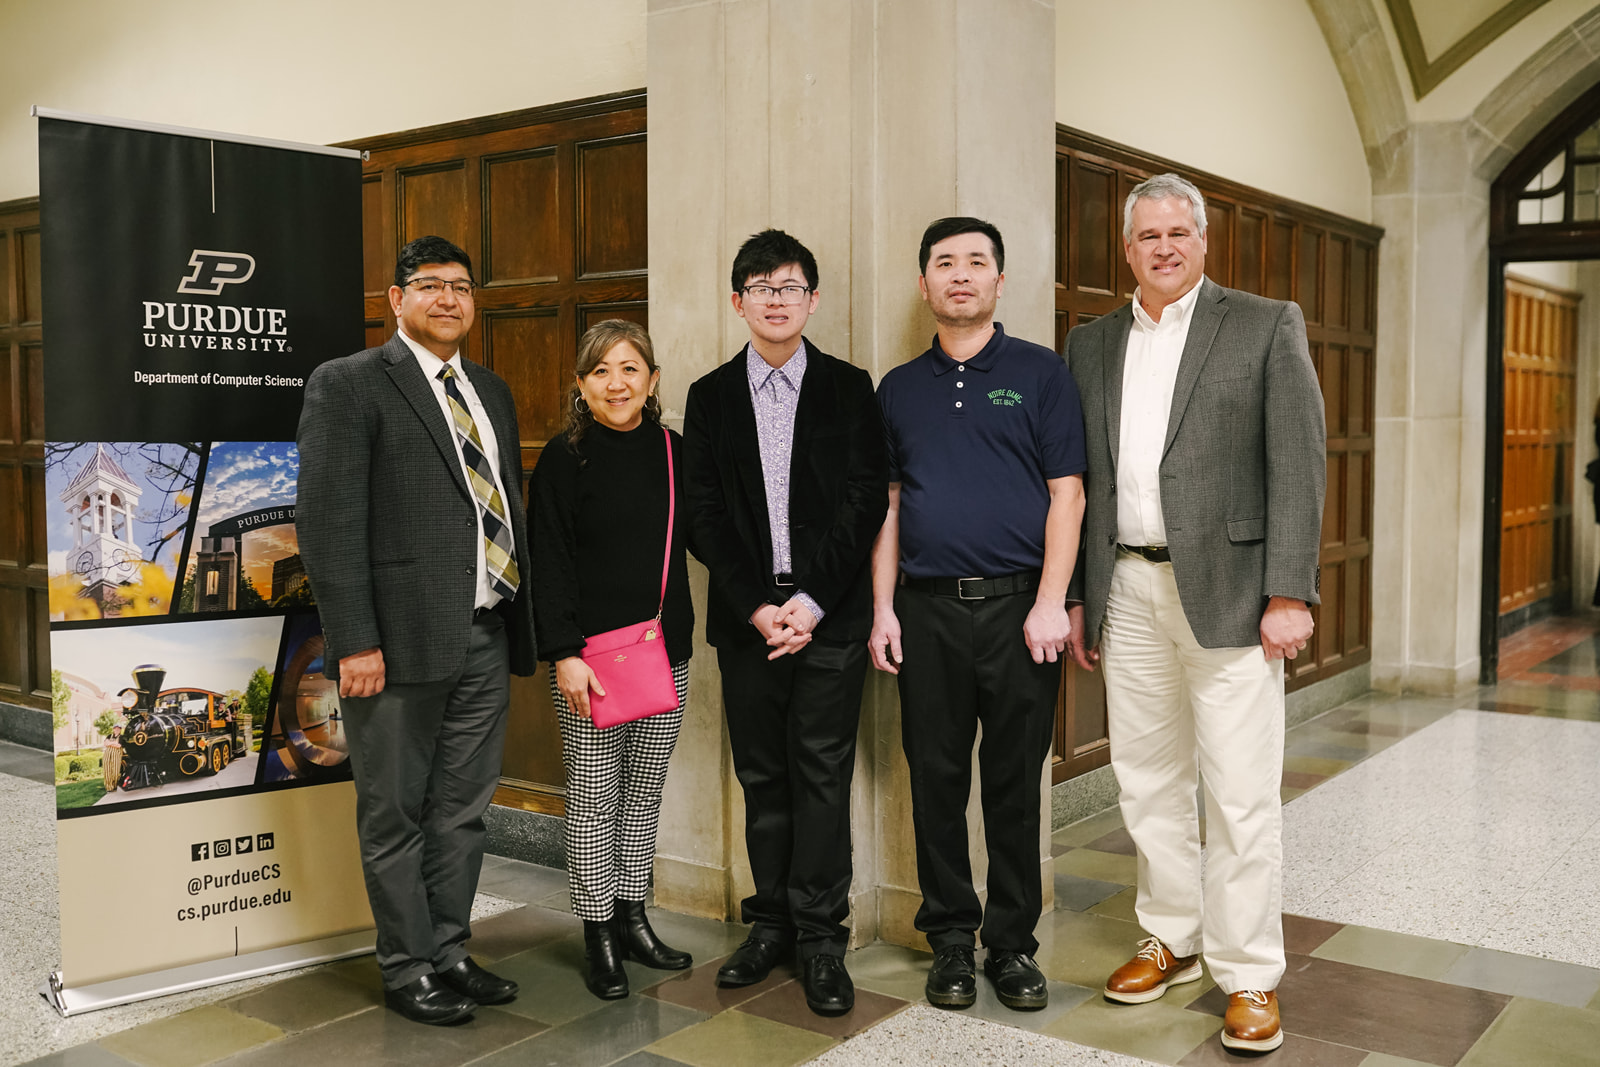 Ryan Cheng and his family, Professor Sunil Prabhakar, and Assistant Department Head Randy Bond